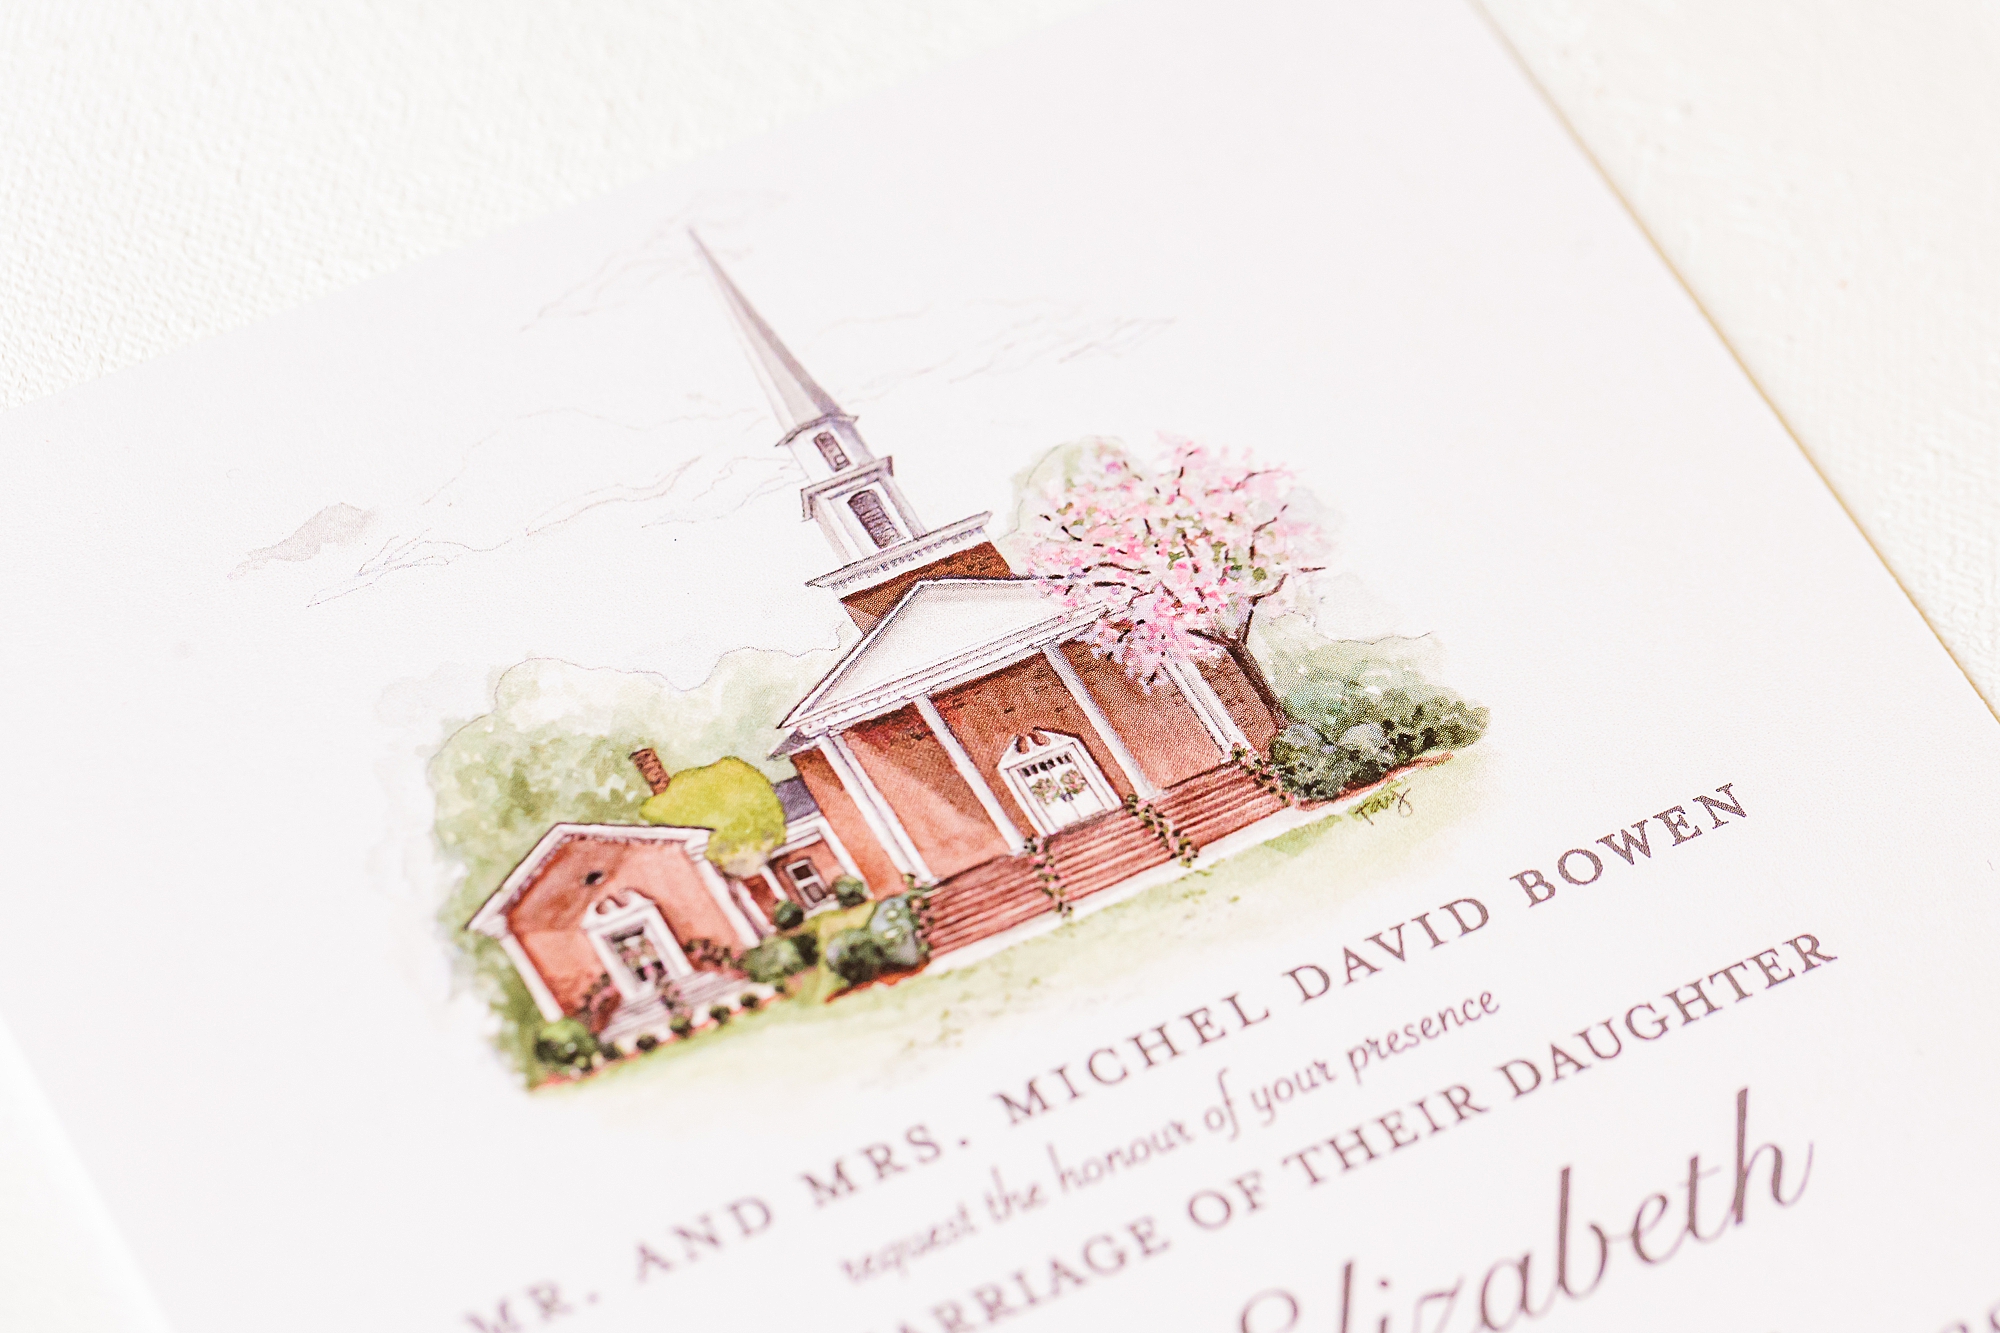 College Park Baptist Church painted on wedding invitation 